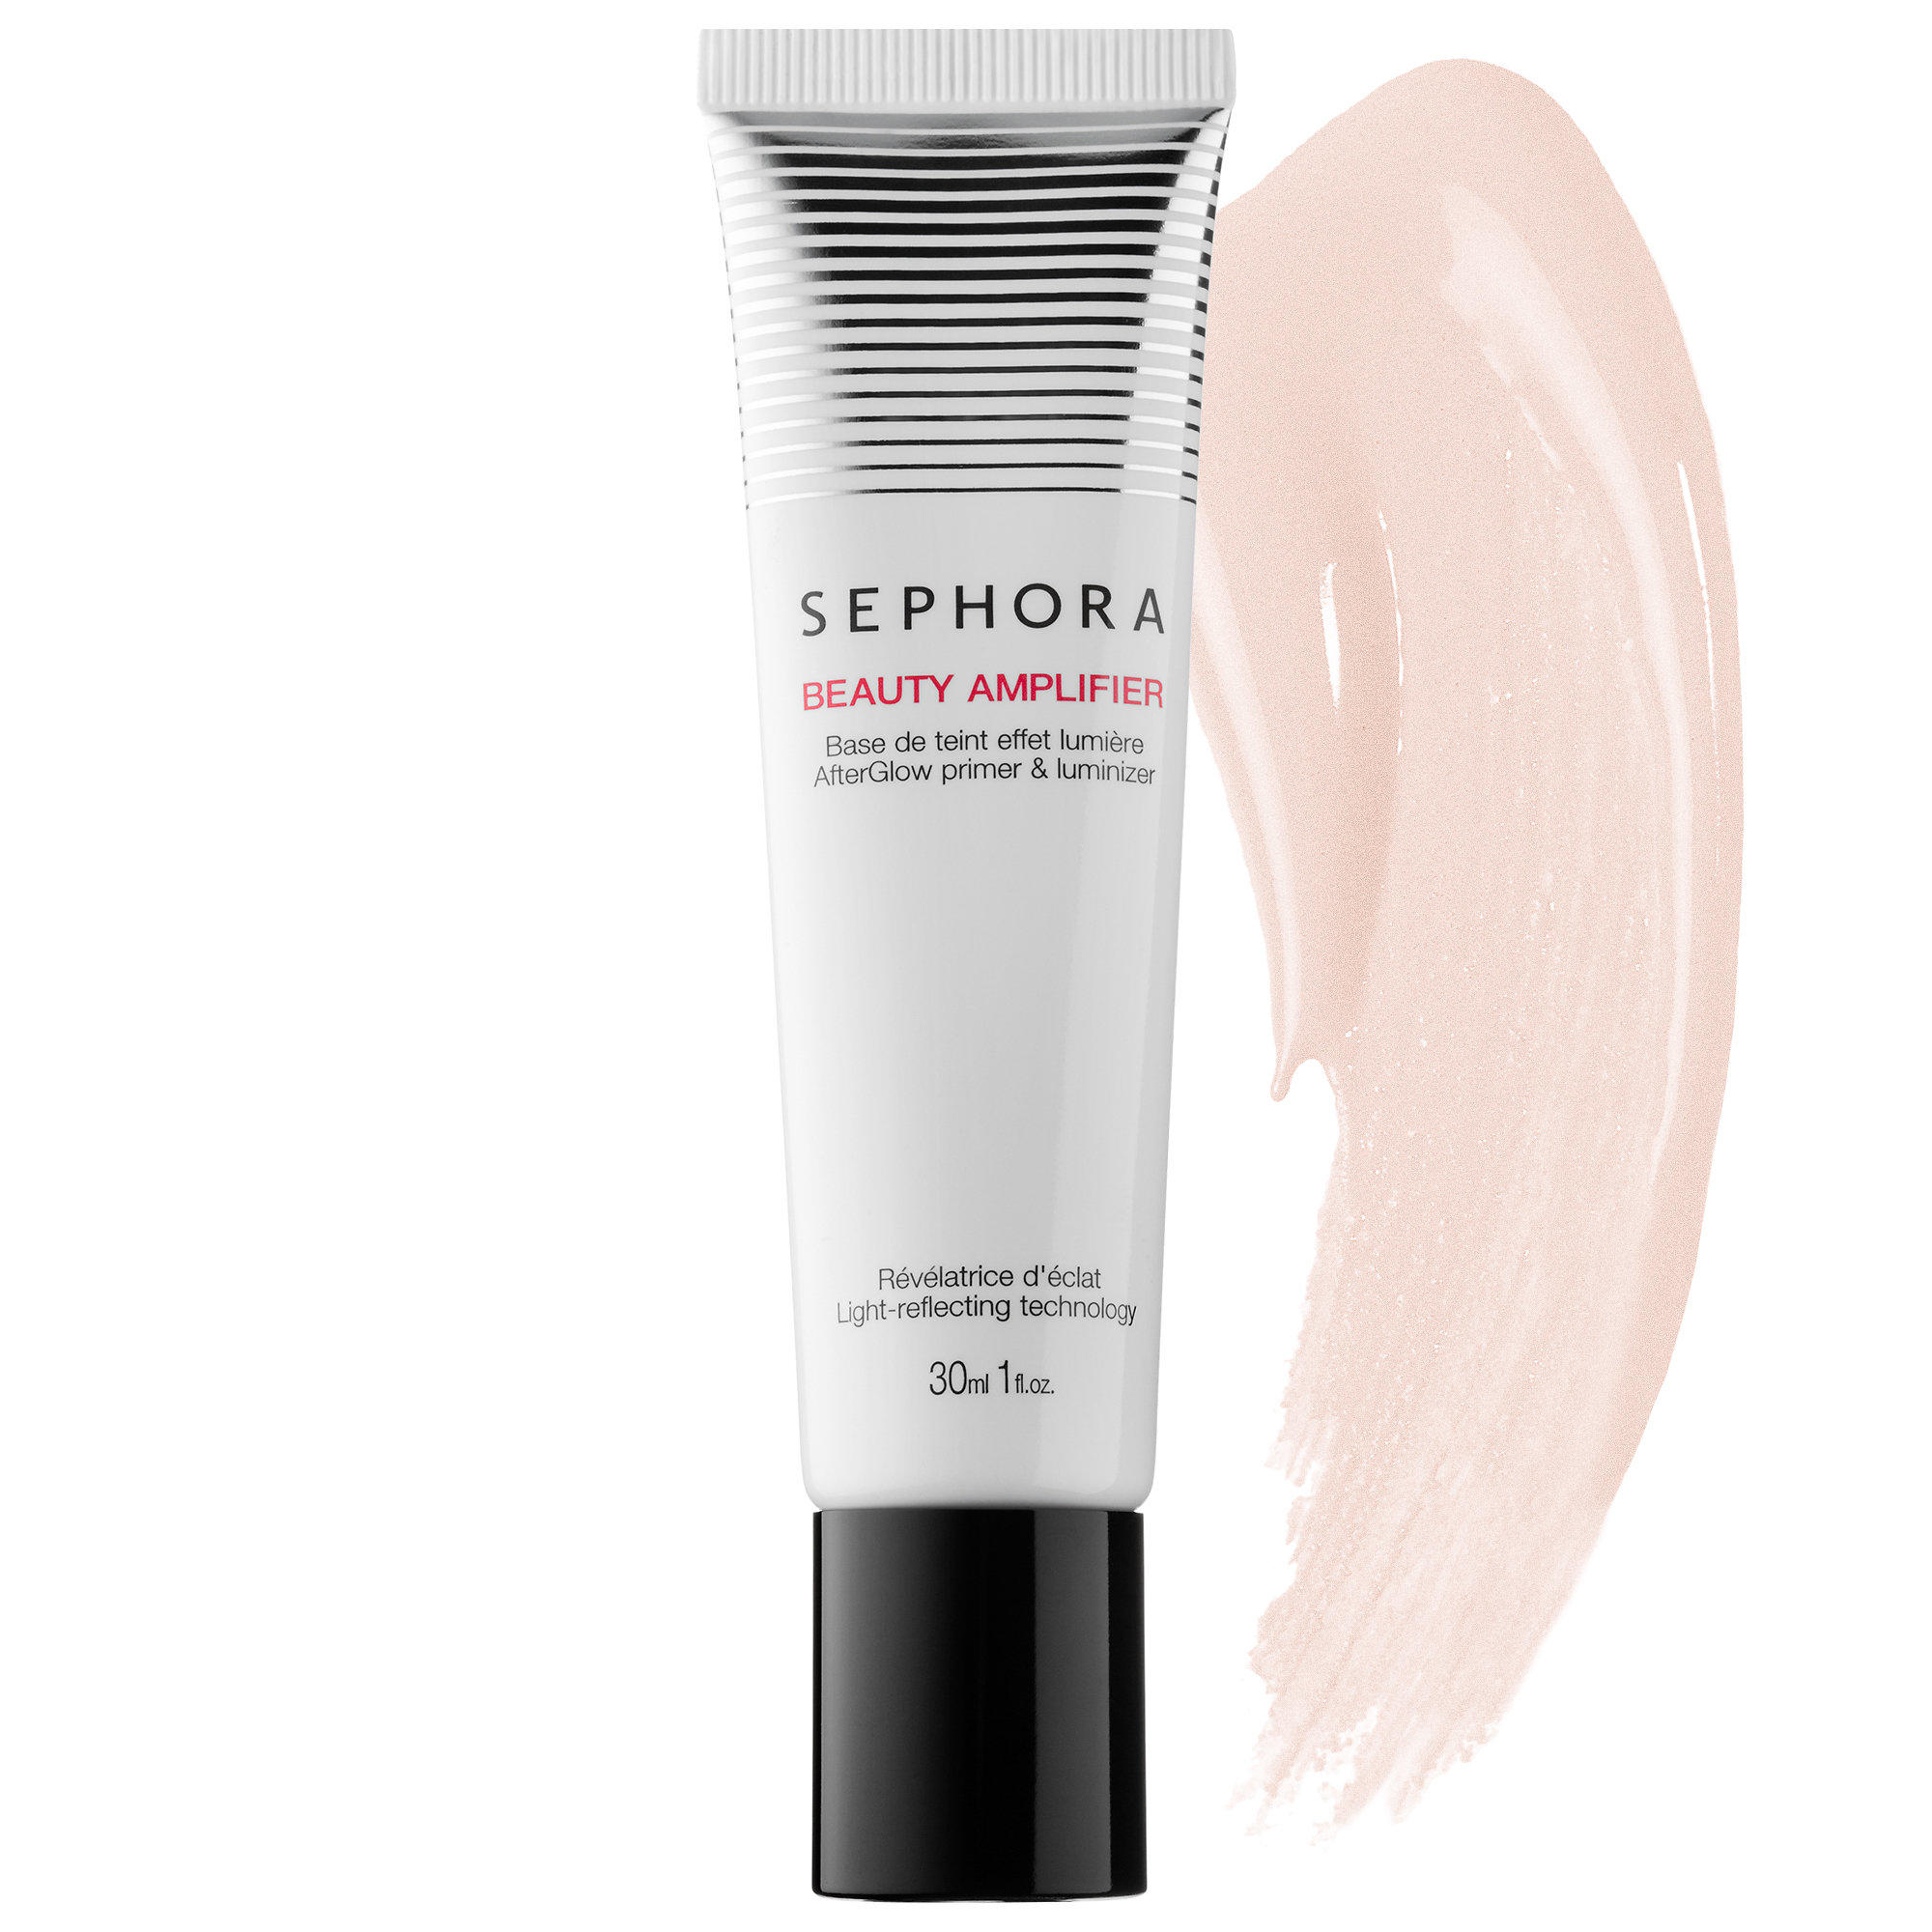 SEPHORA Beauty Amplifier Afterglow Primer & Luminizer